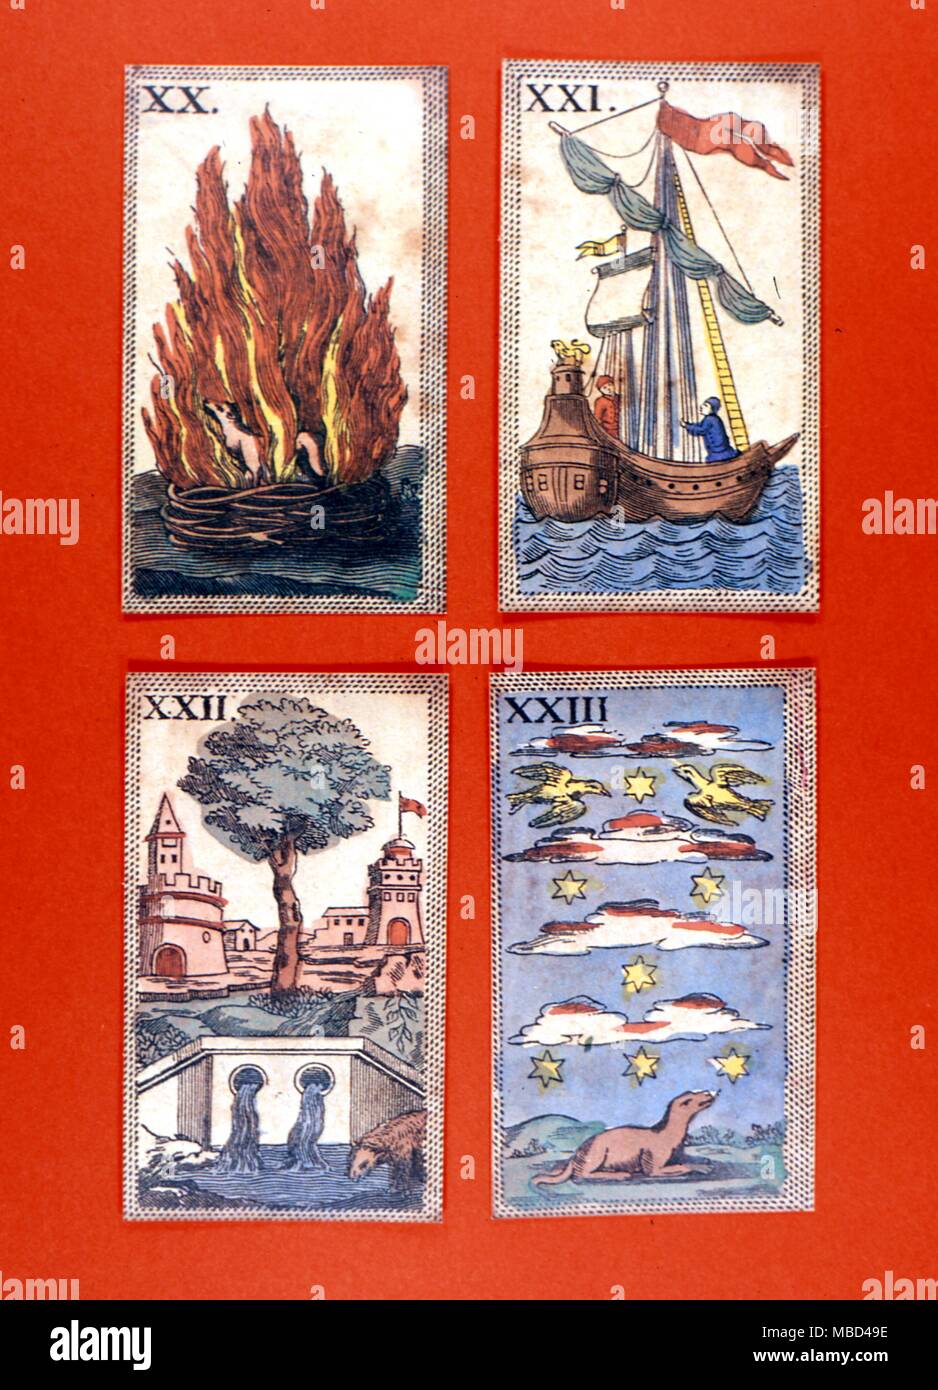 Metz Foire Vignette Poster Stamp 